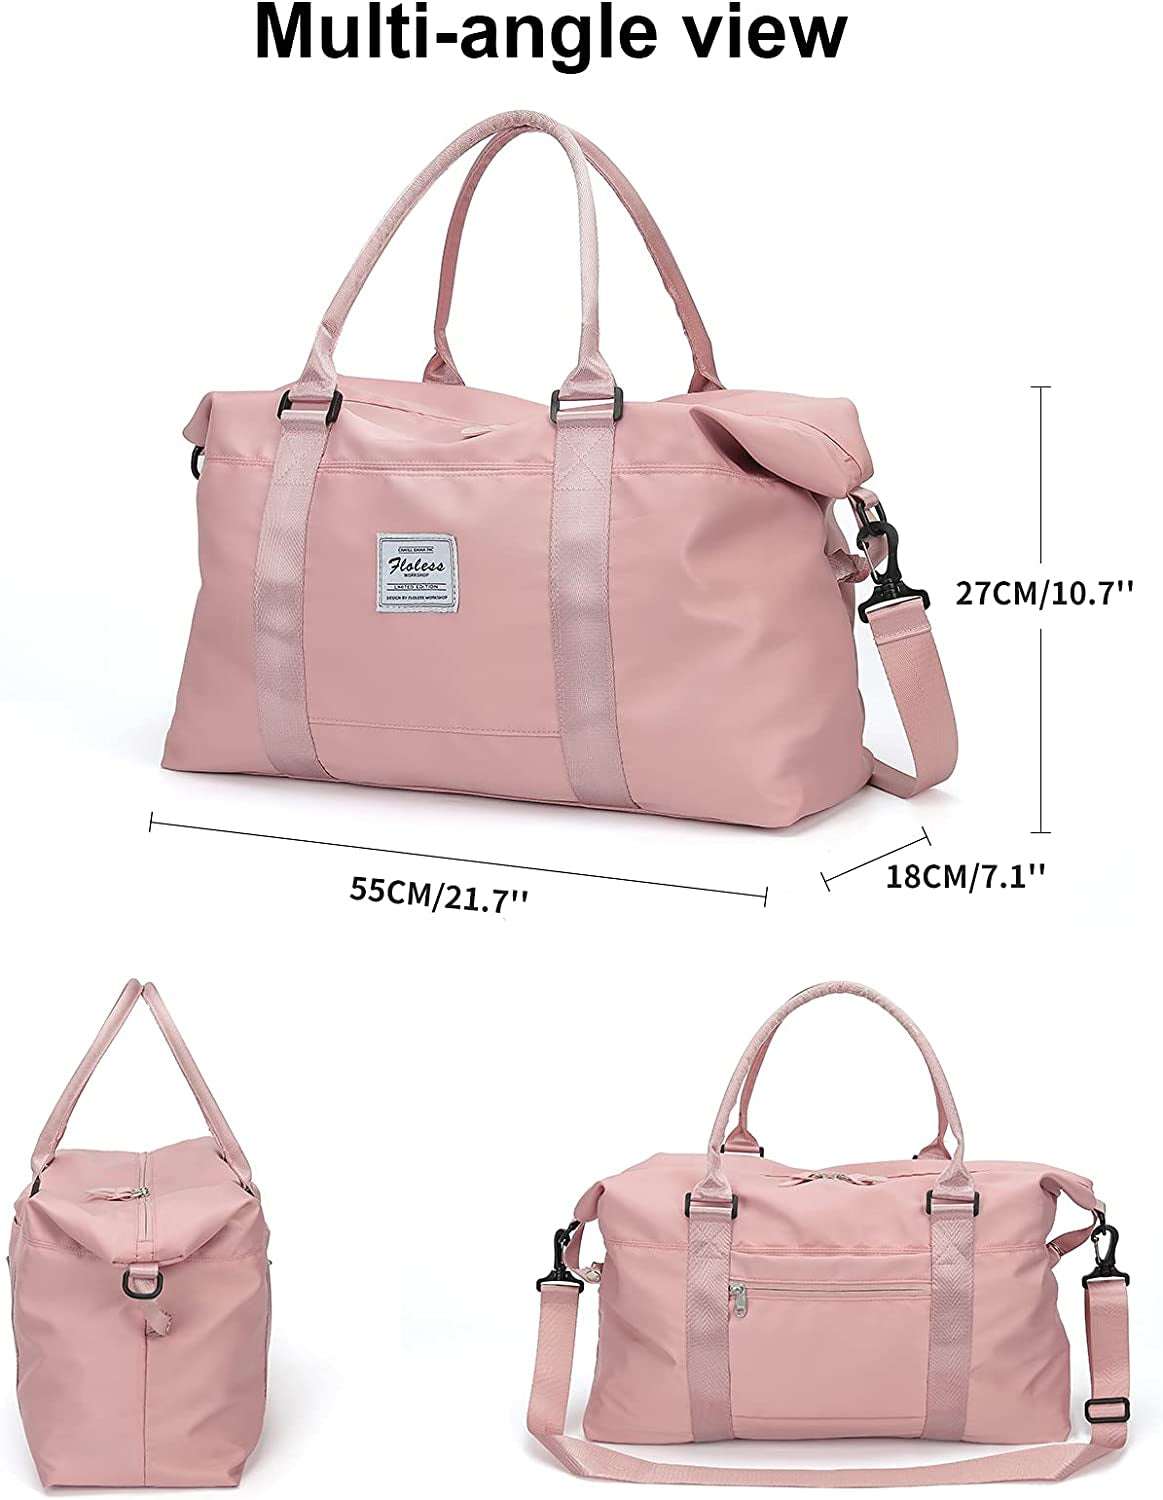 HYC00 Travel Duffel Bag - Large Capacity, Water-Resistant, Multi-Pocket